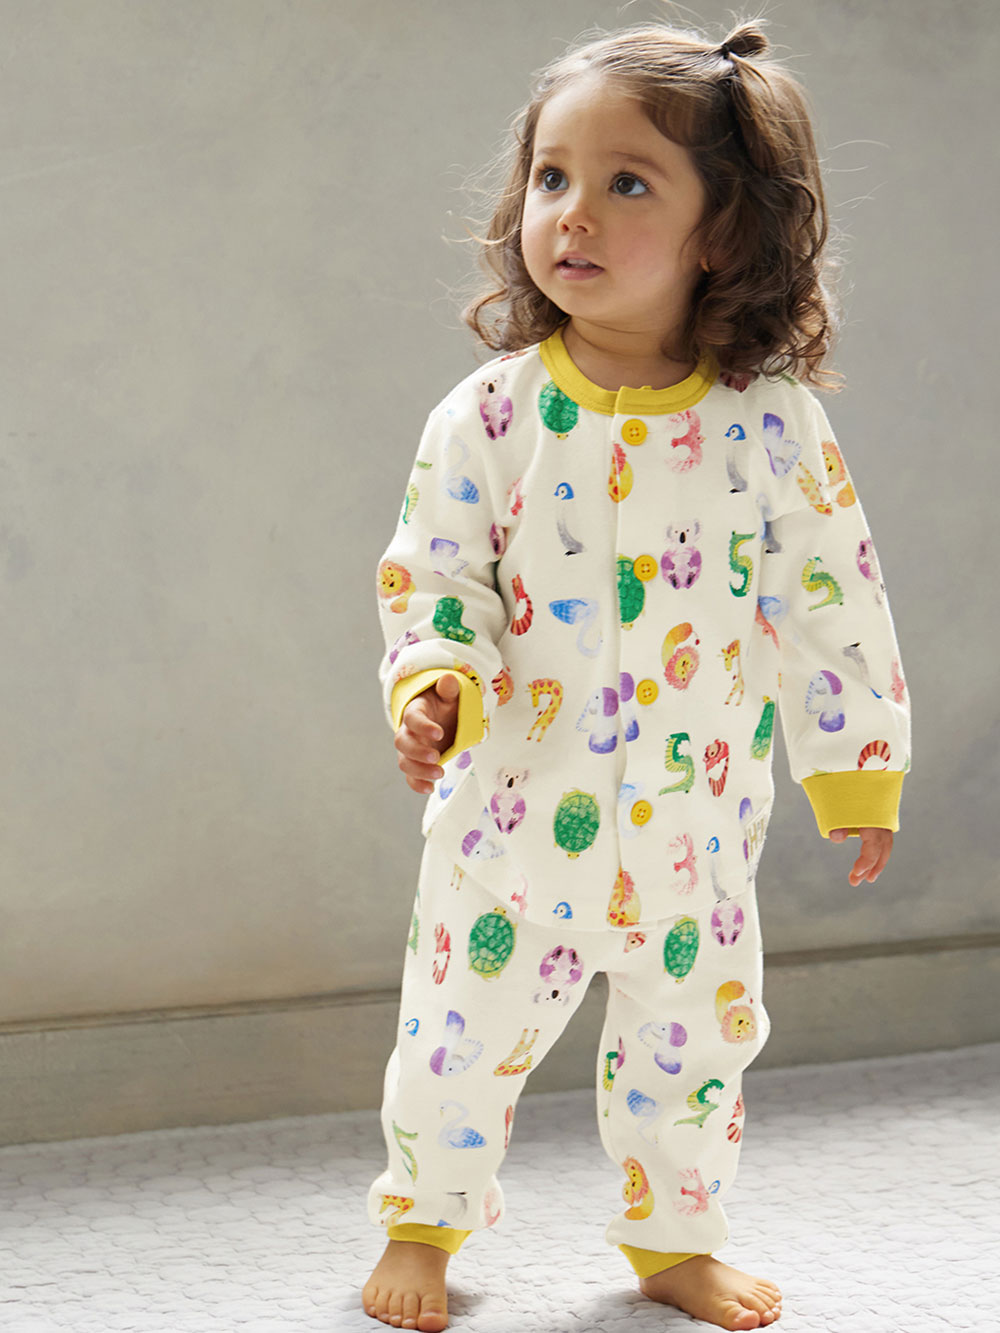 BITZ】どうぶつナンバープリントパジャマ | 赤ちゃん パジャマ